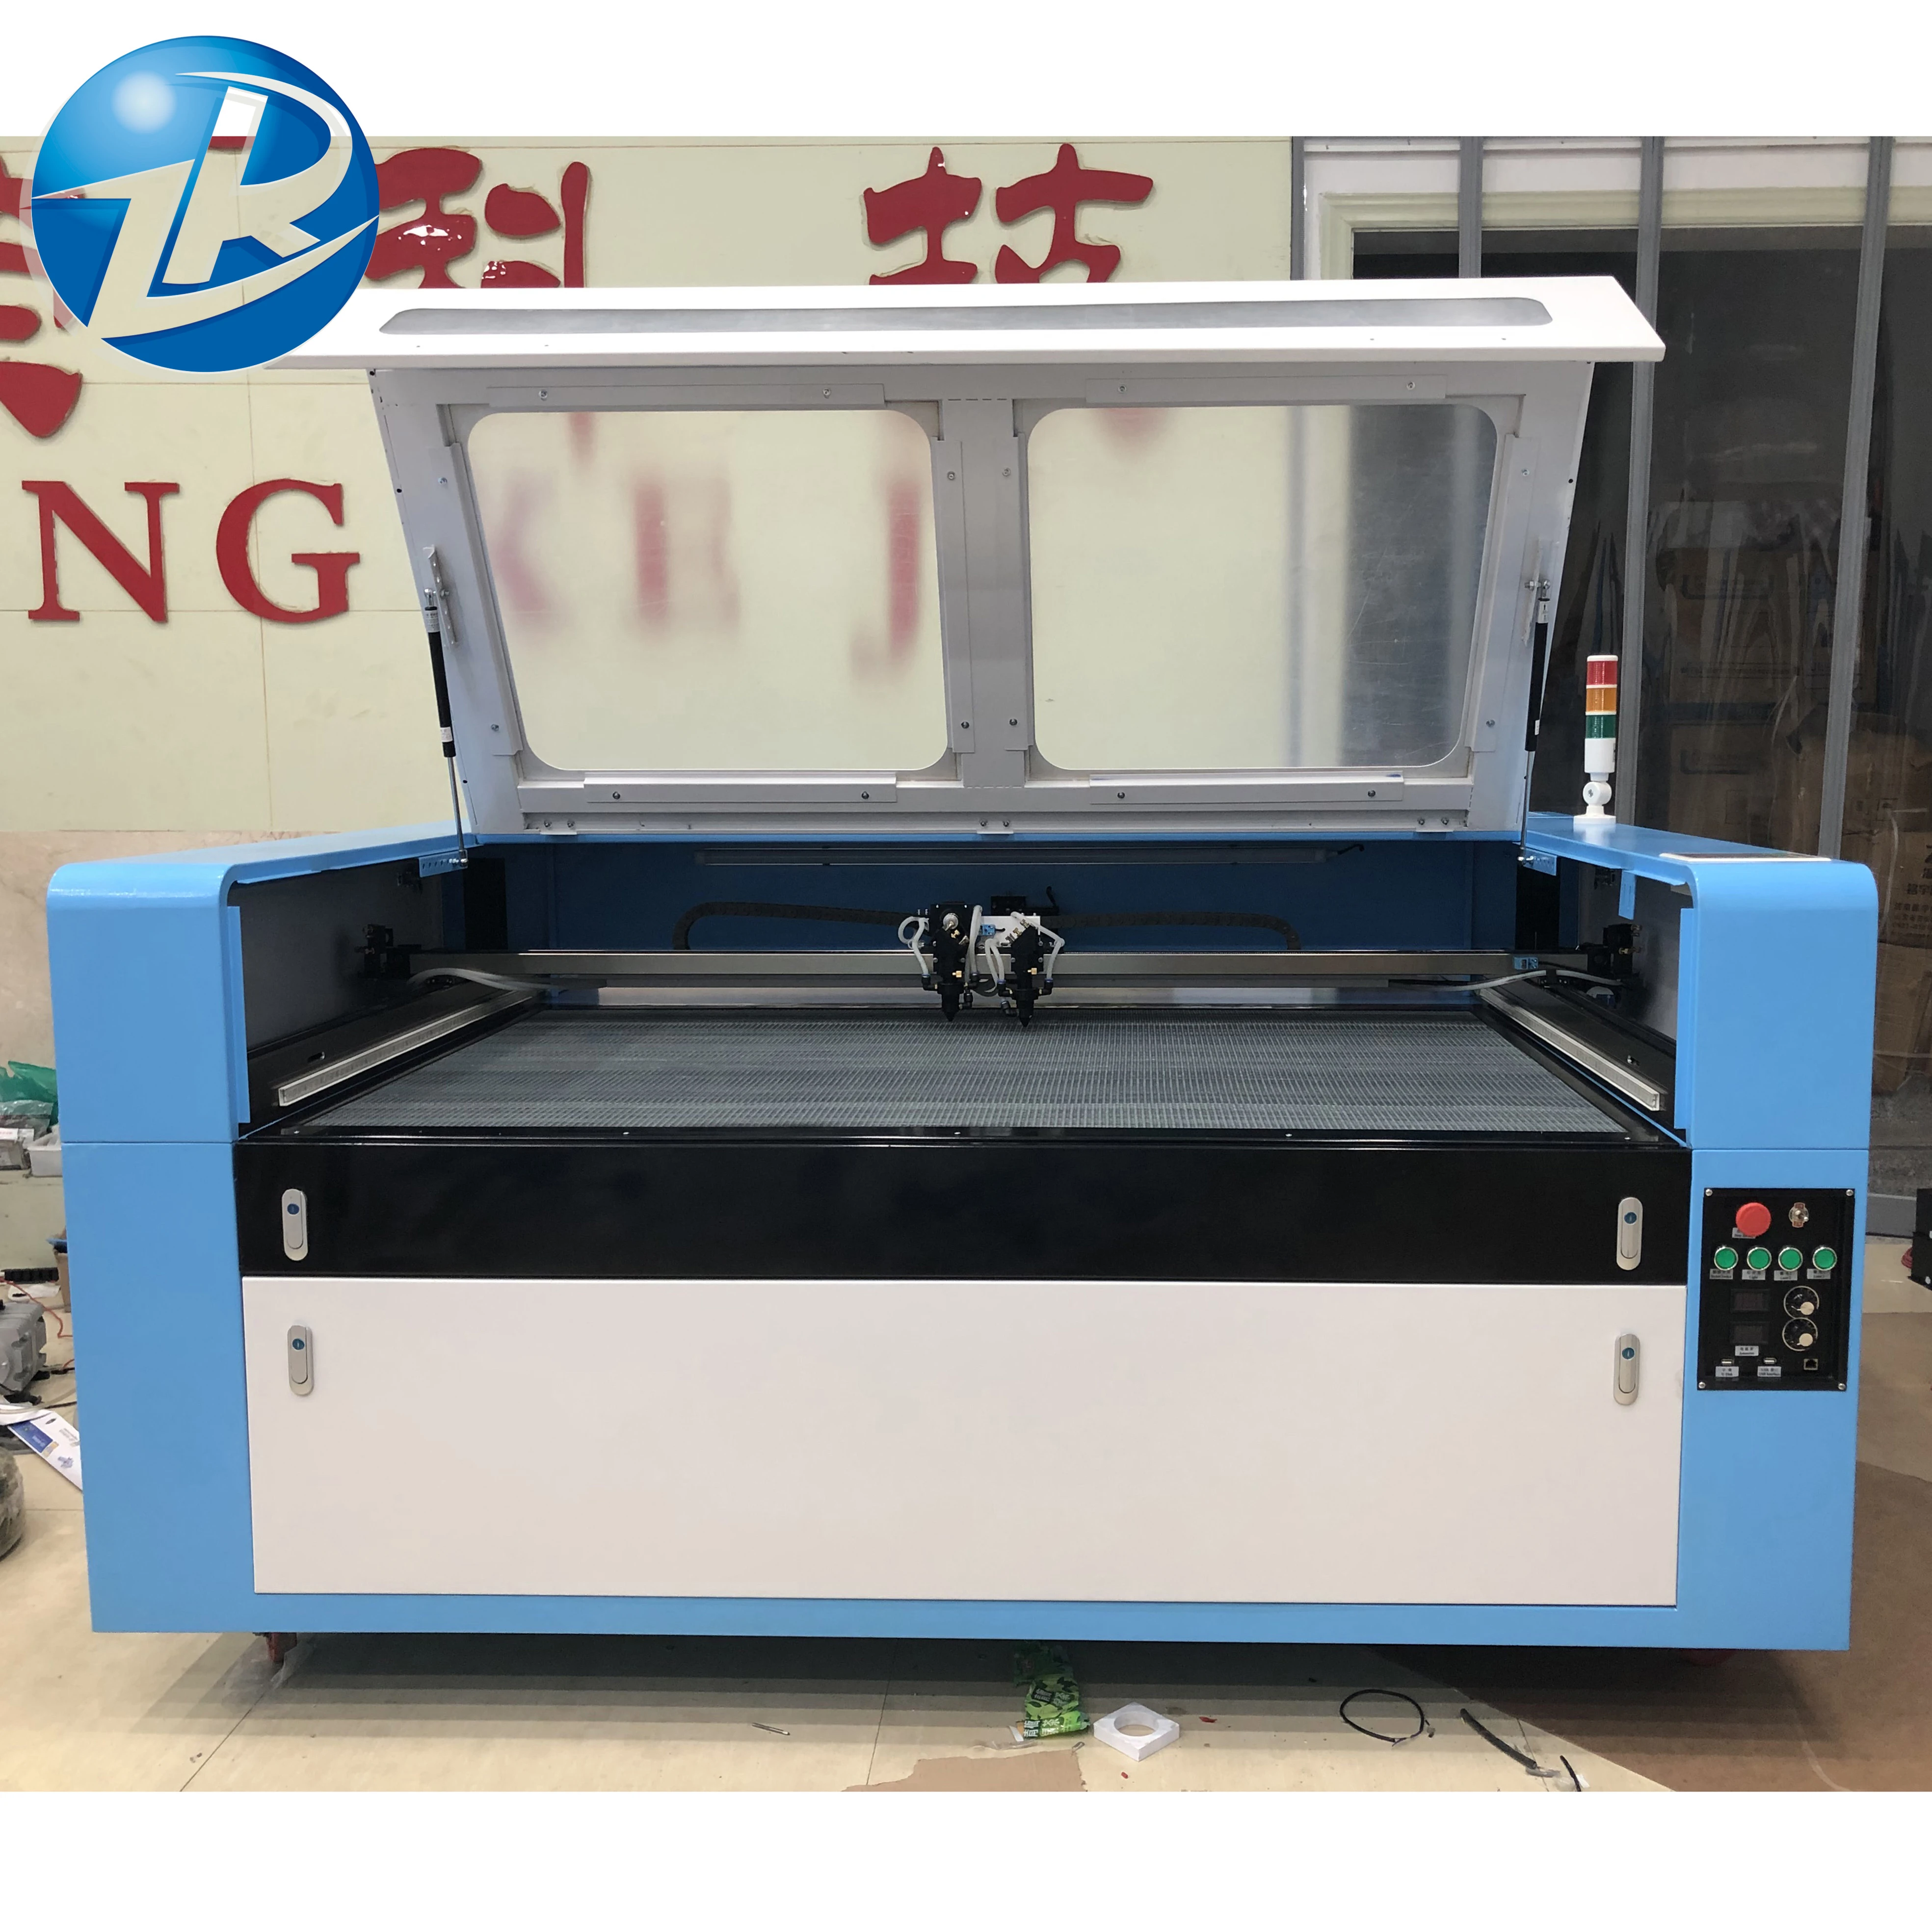 SHZR cnc engraving machine cnc laser cutting machine cnc laser engraving machine